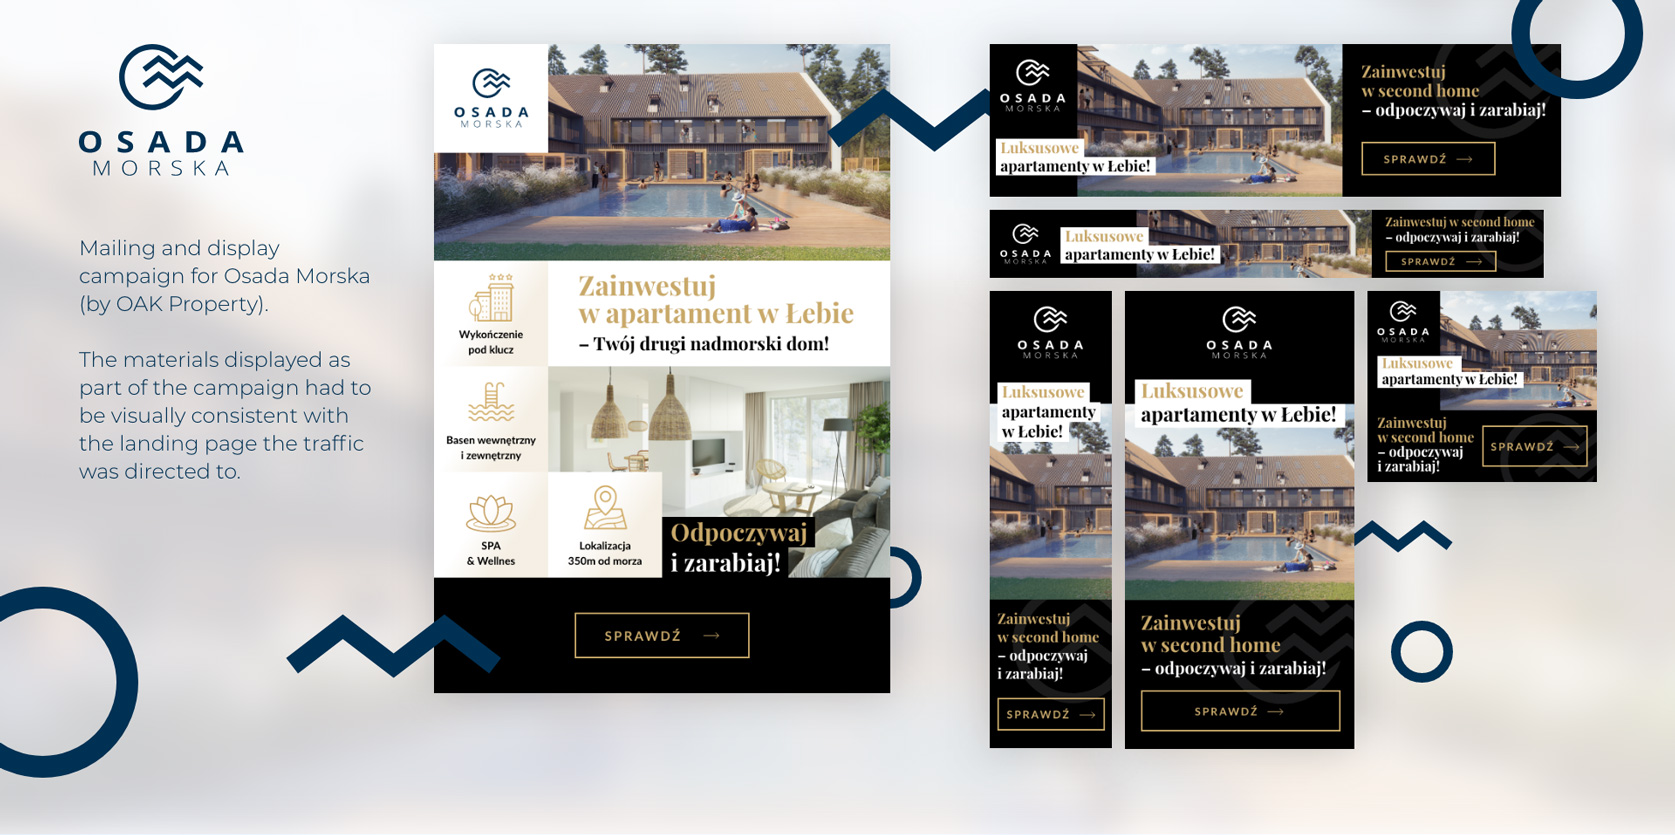 OAK Properties - Osada Morska (mailing and web banners)